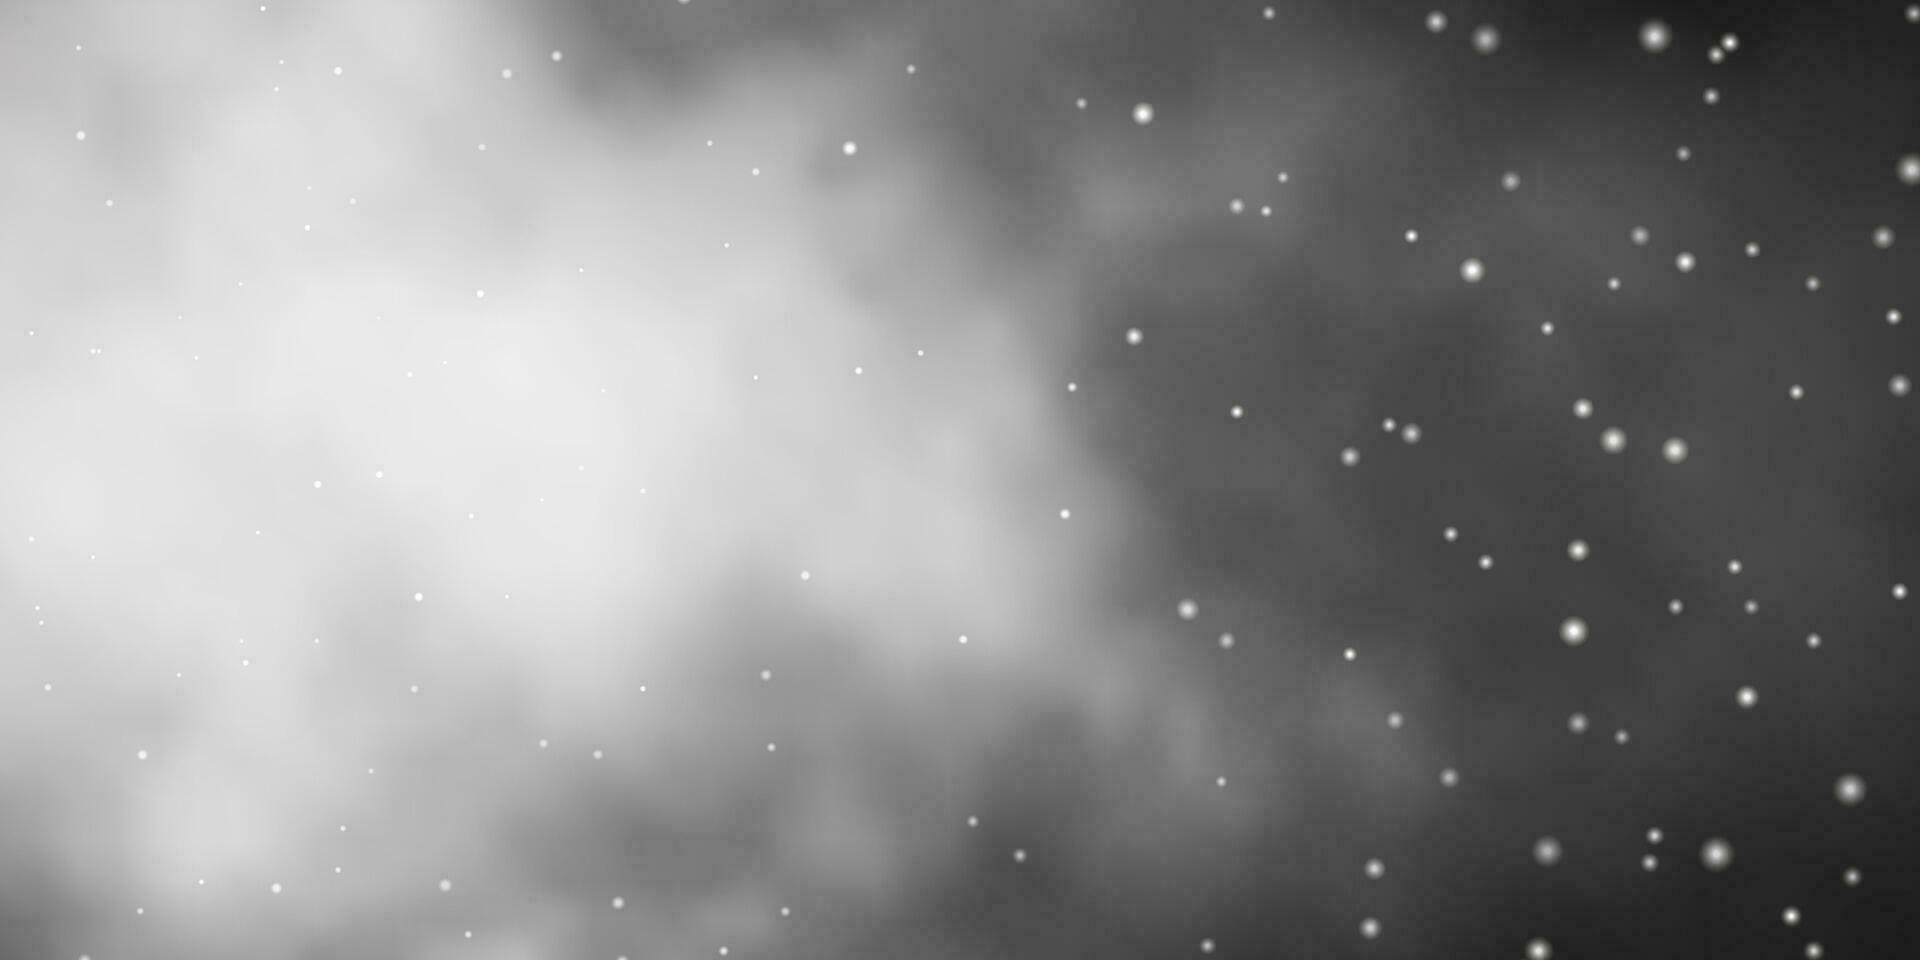 plantilla de vector gris oscuro con estrellas de neón.